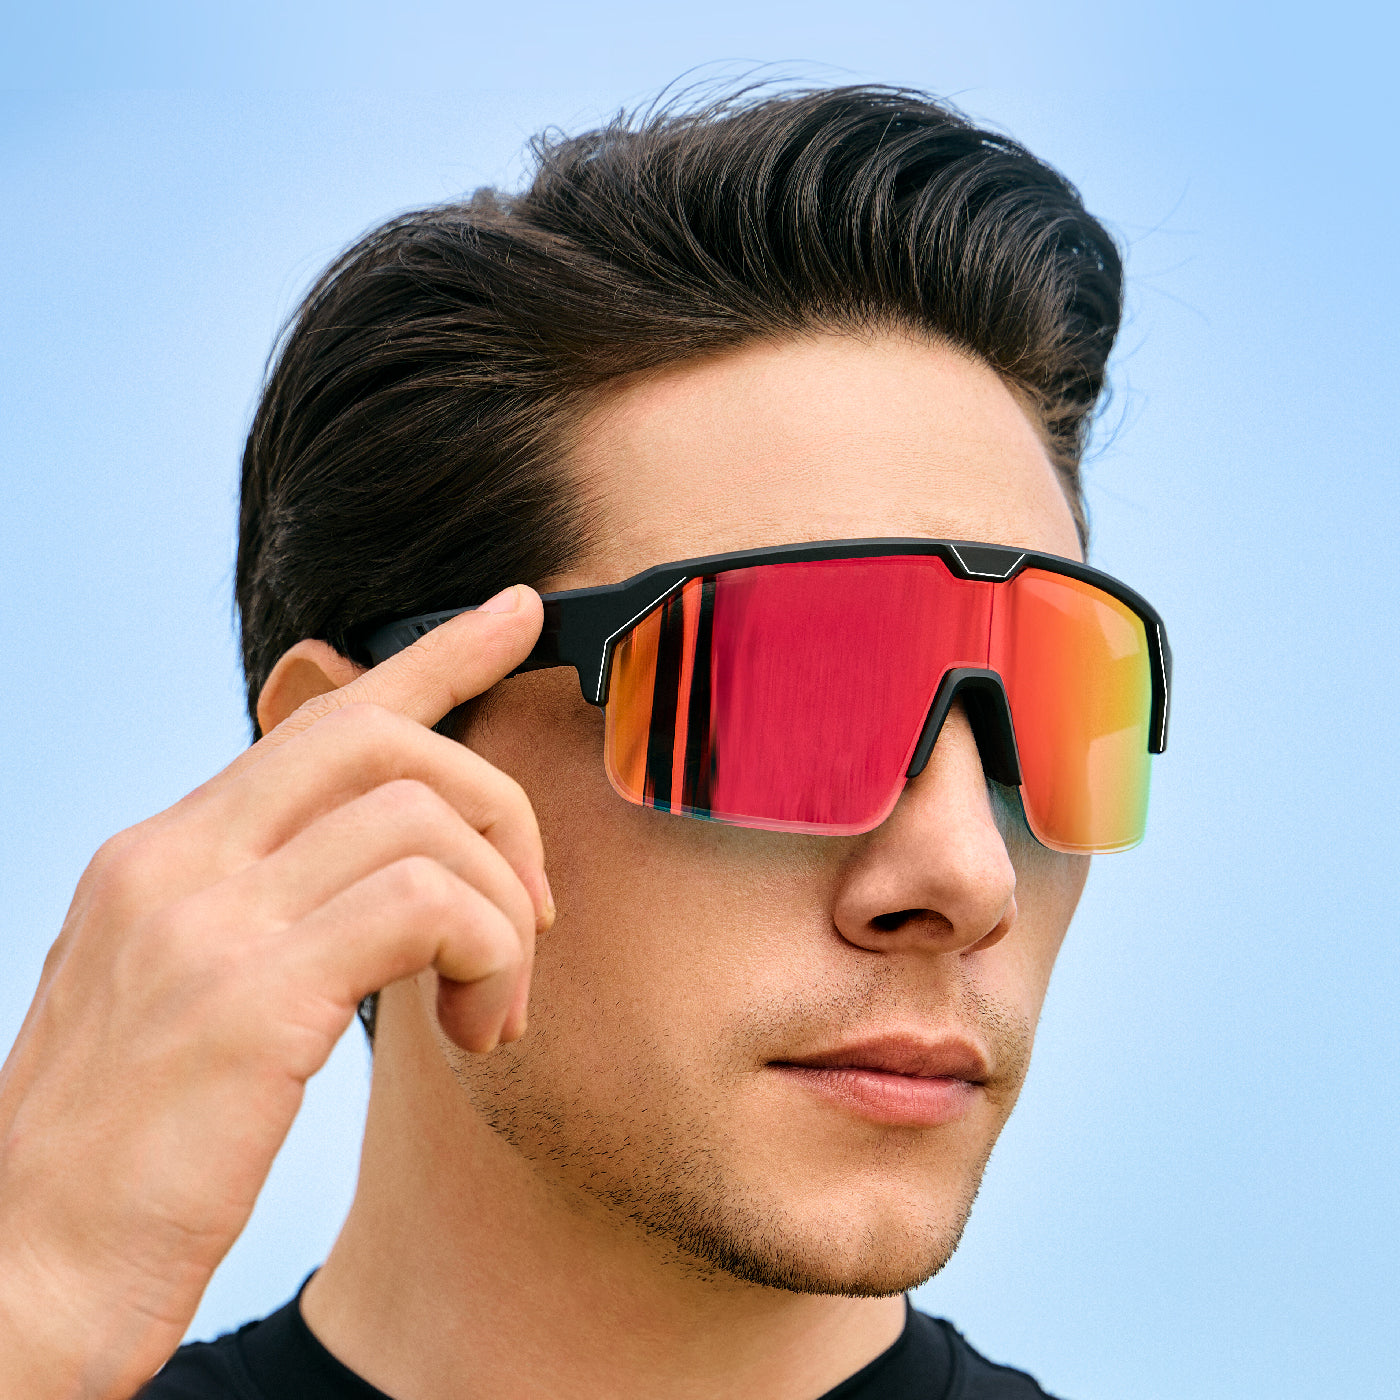 Music Shield Bluetooth audio slide-to-dim sports sunglasses